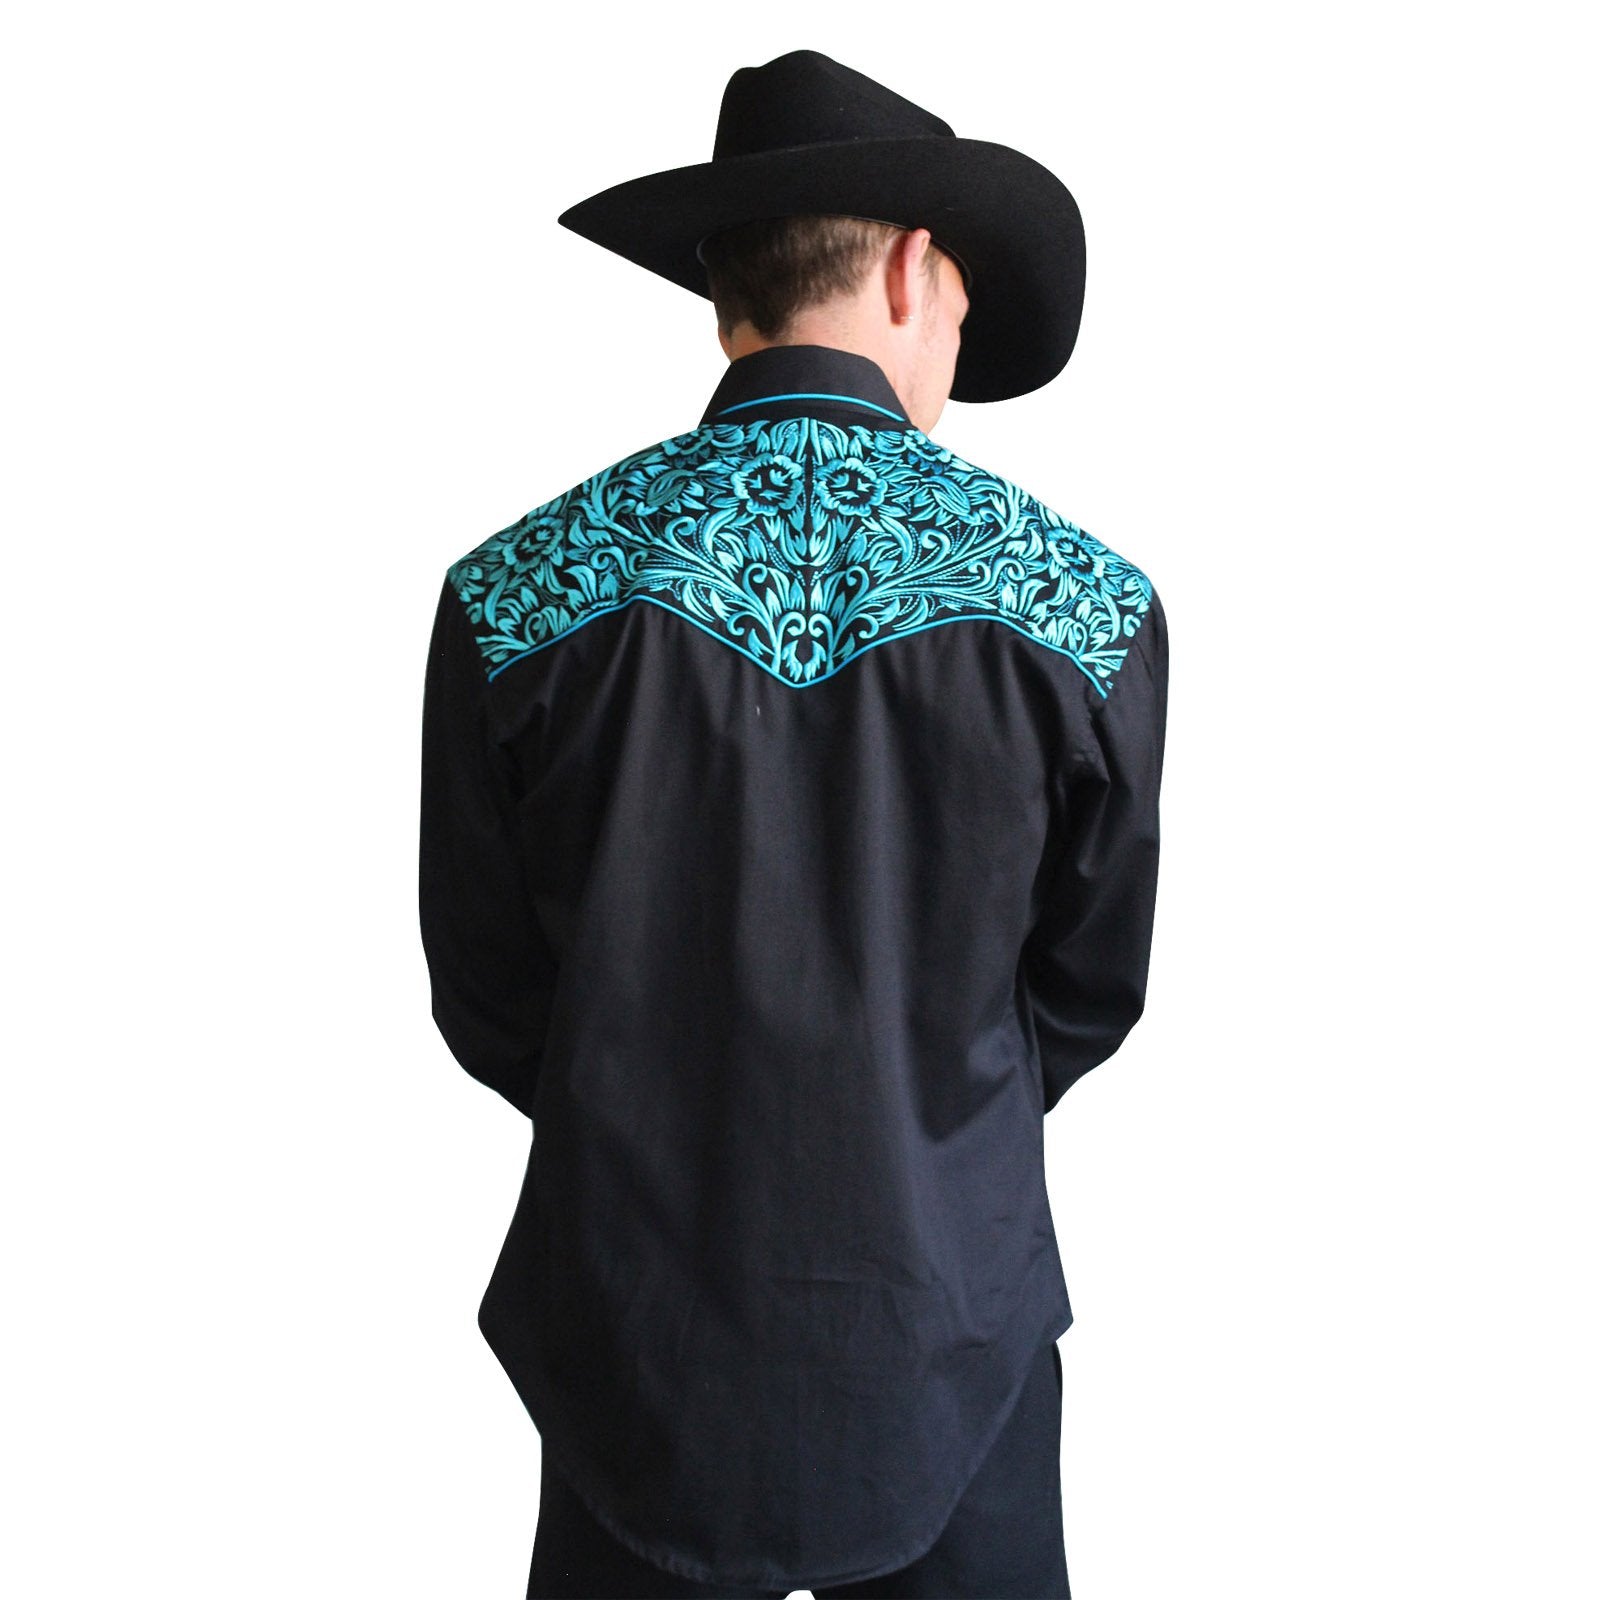 Rockmount Ranch Wear Men's Vintage Western Shirt Embroidered Yolk Turquoise on Black Back